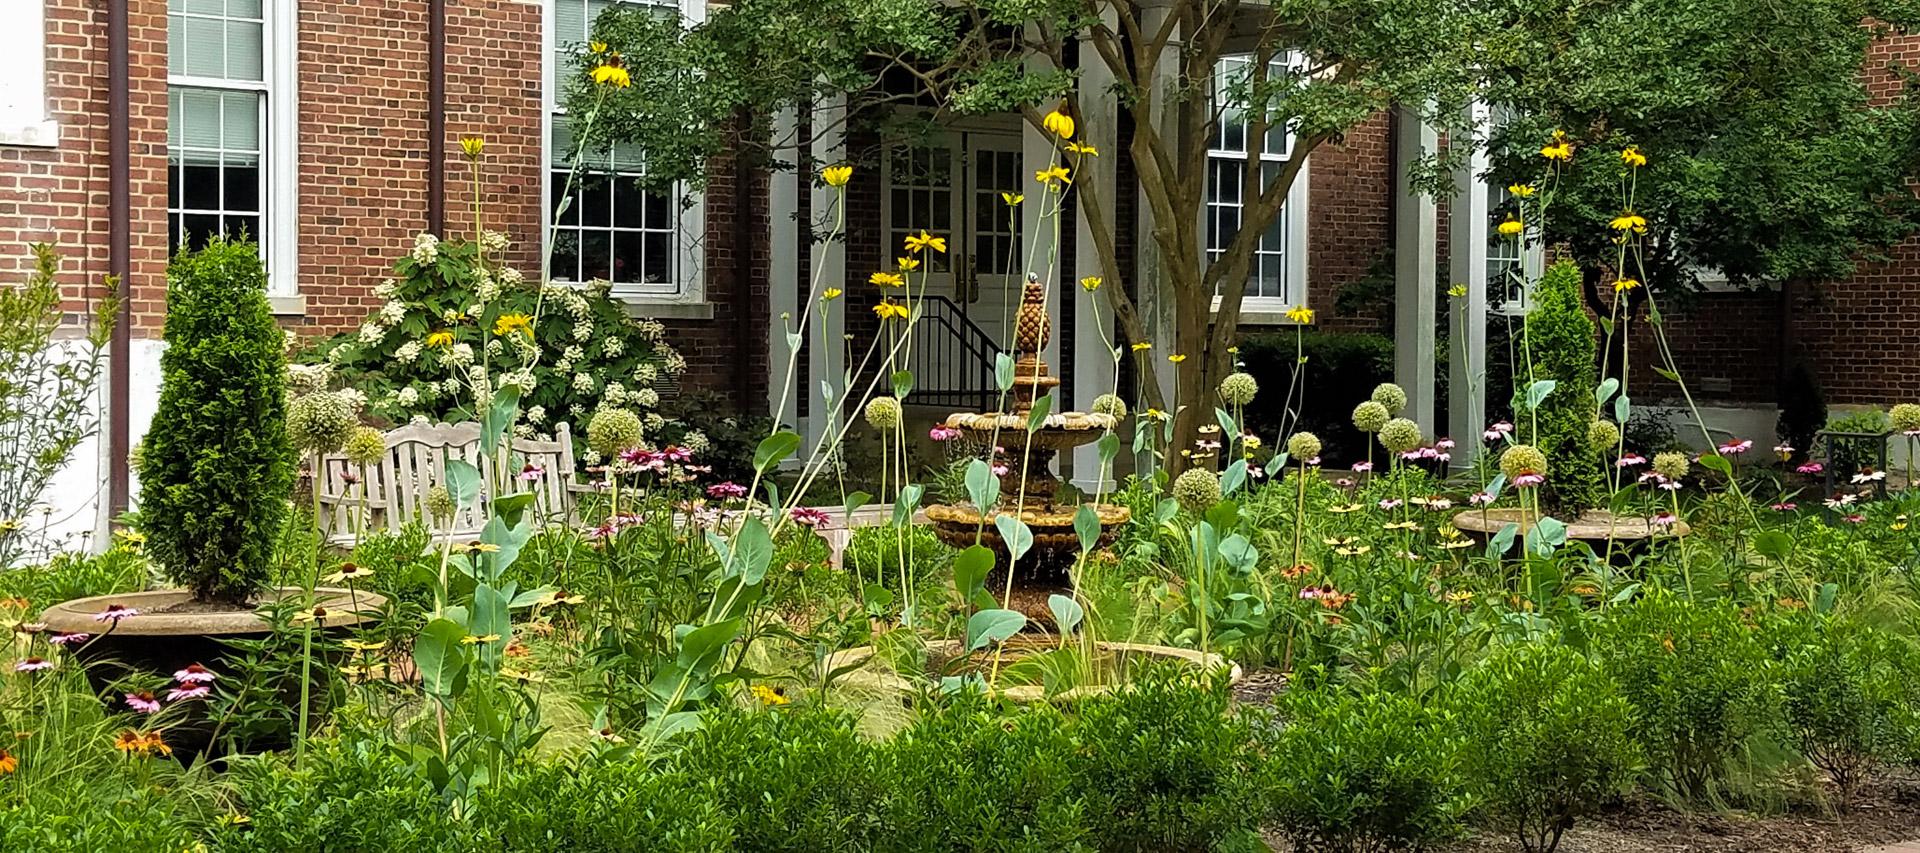 beautiful garden at Salisbury University